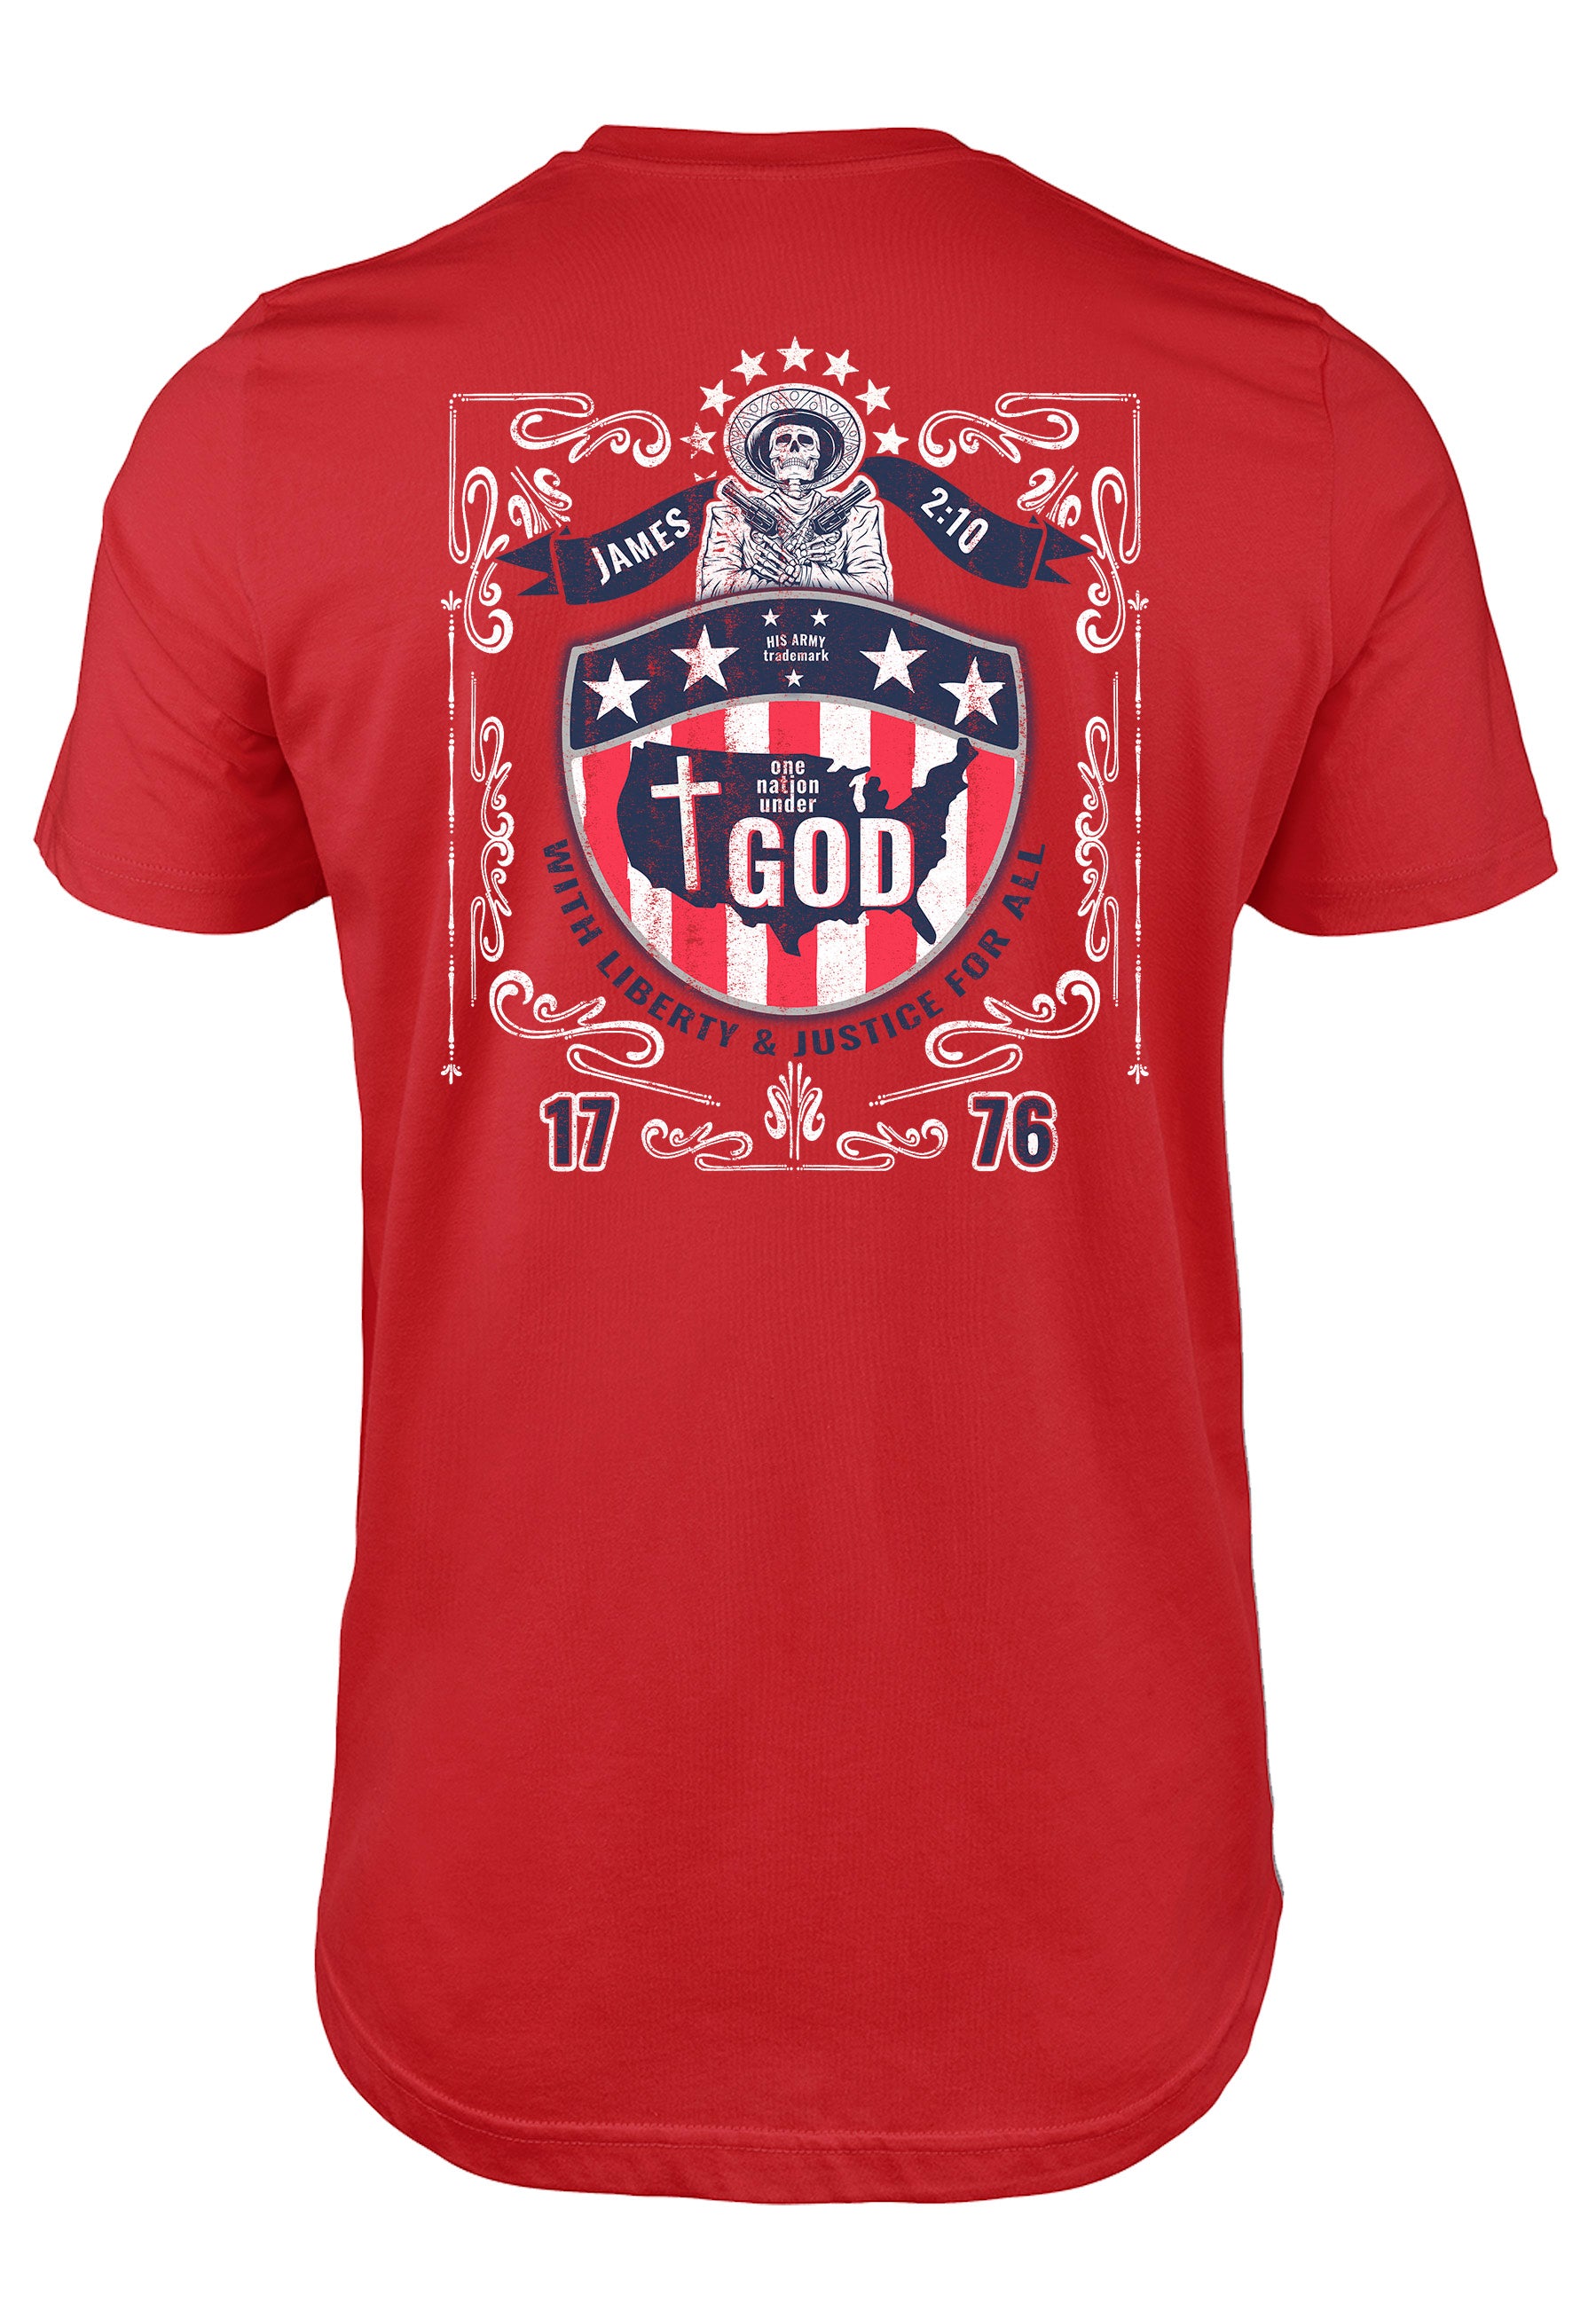 Dia de Los Muertos Christian patriot t-shirt in red